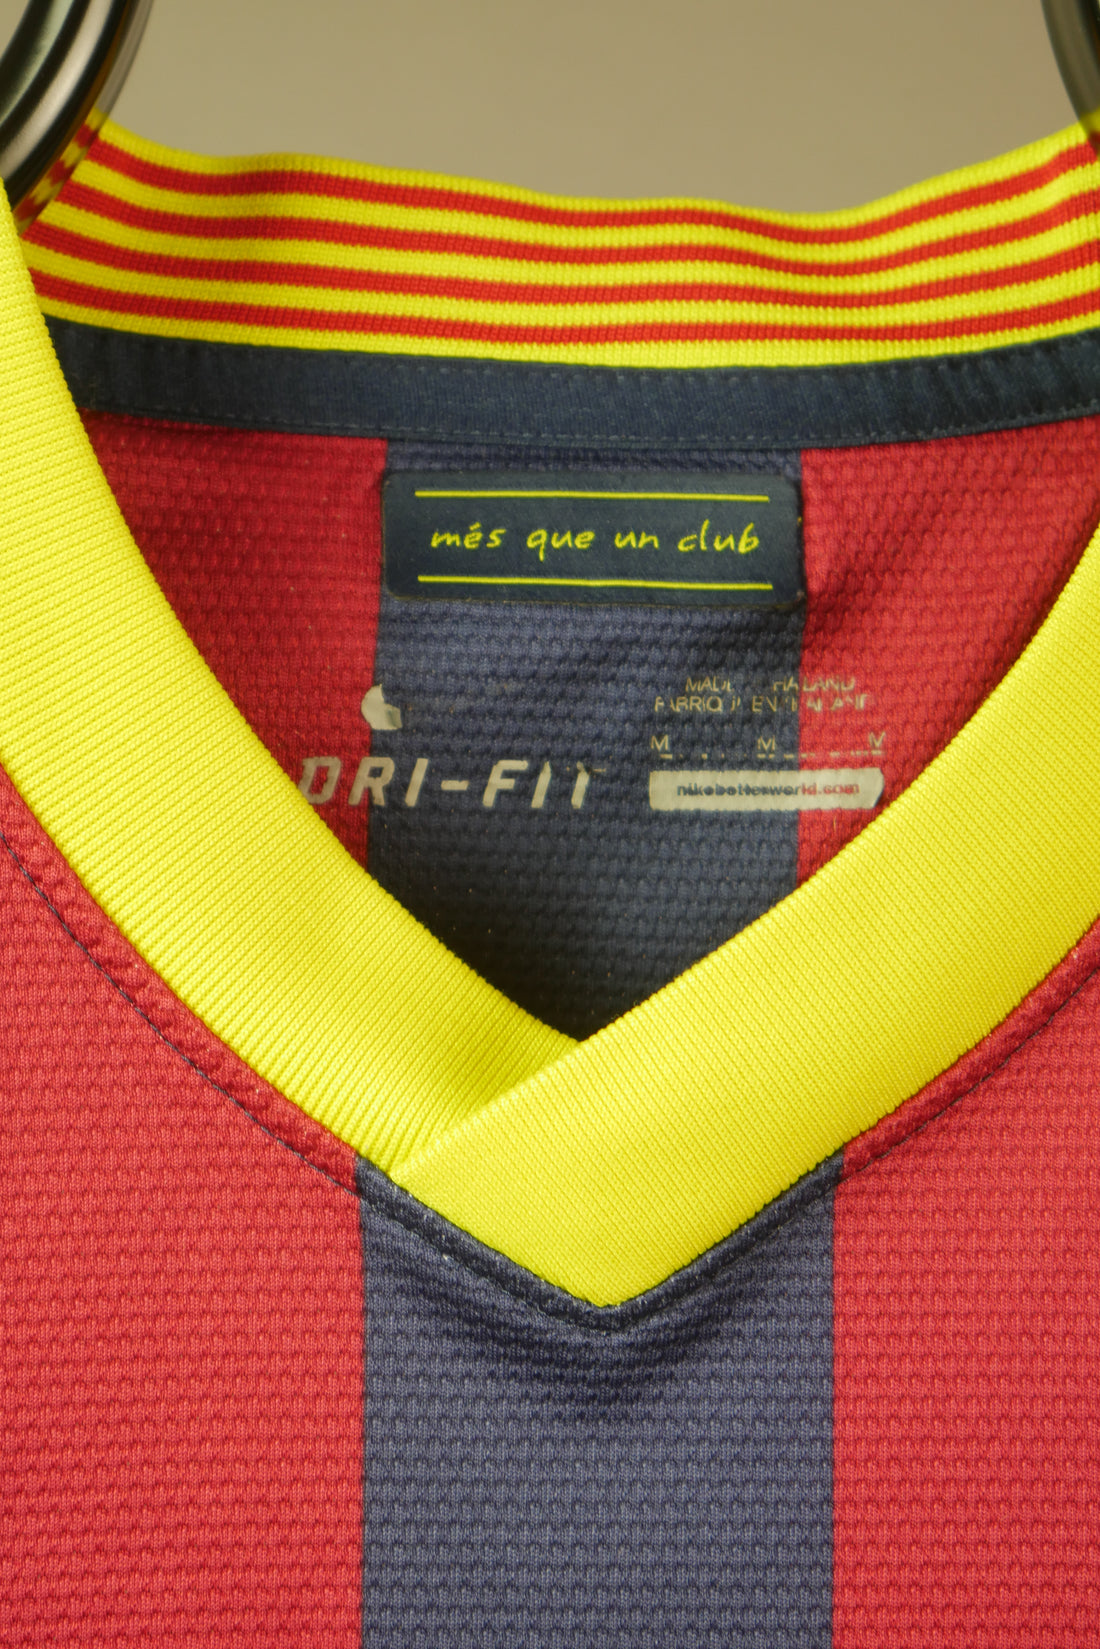 The Barcelona FC Shirt (S)